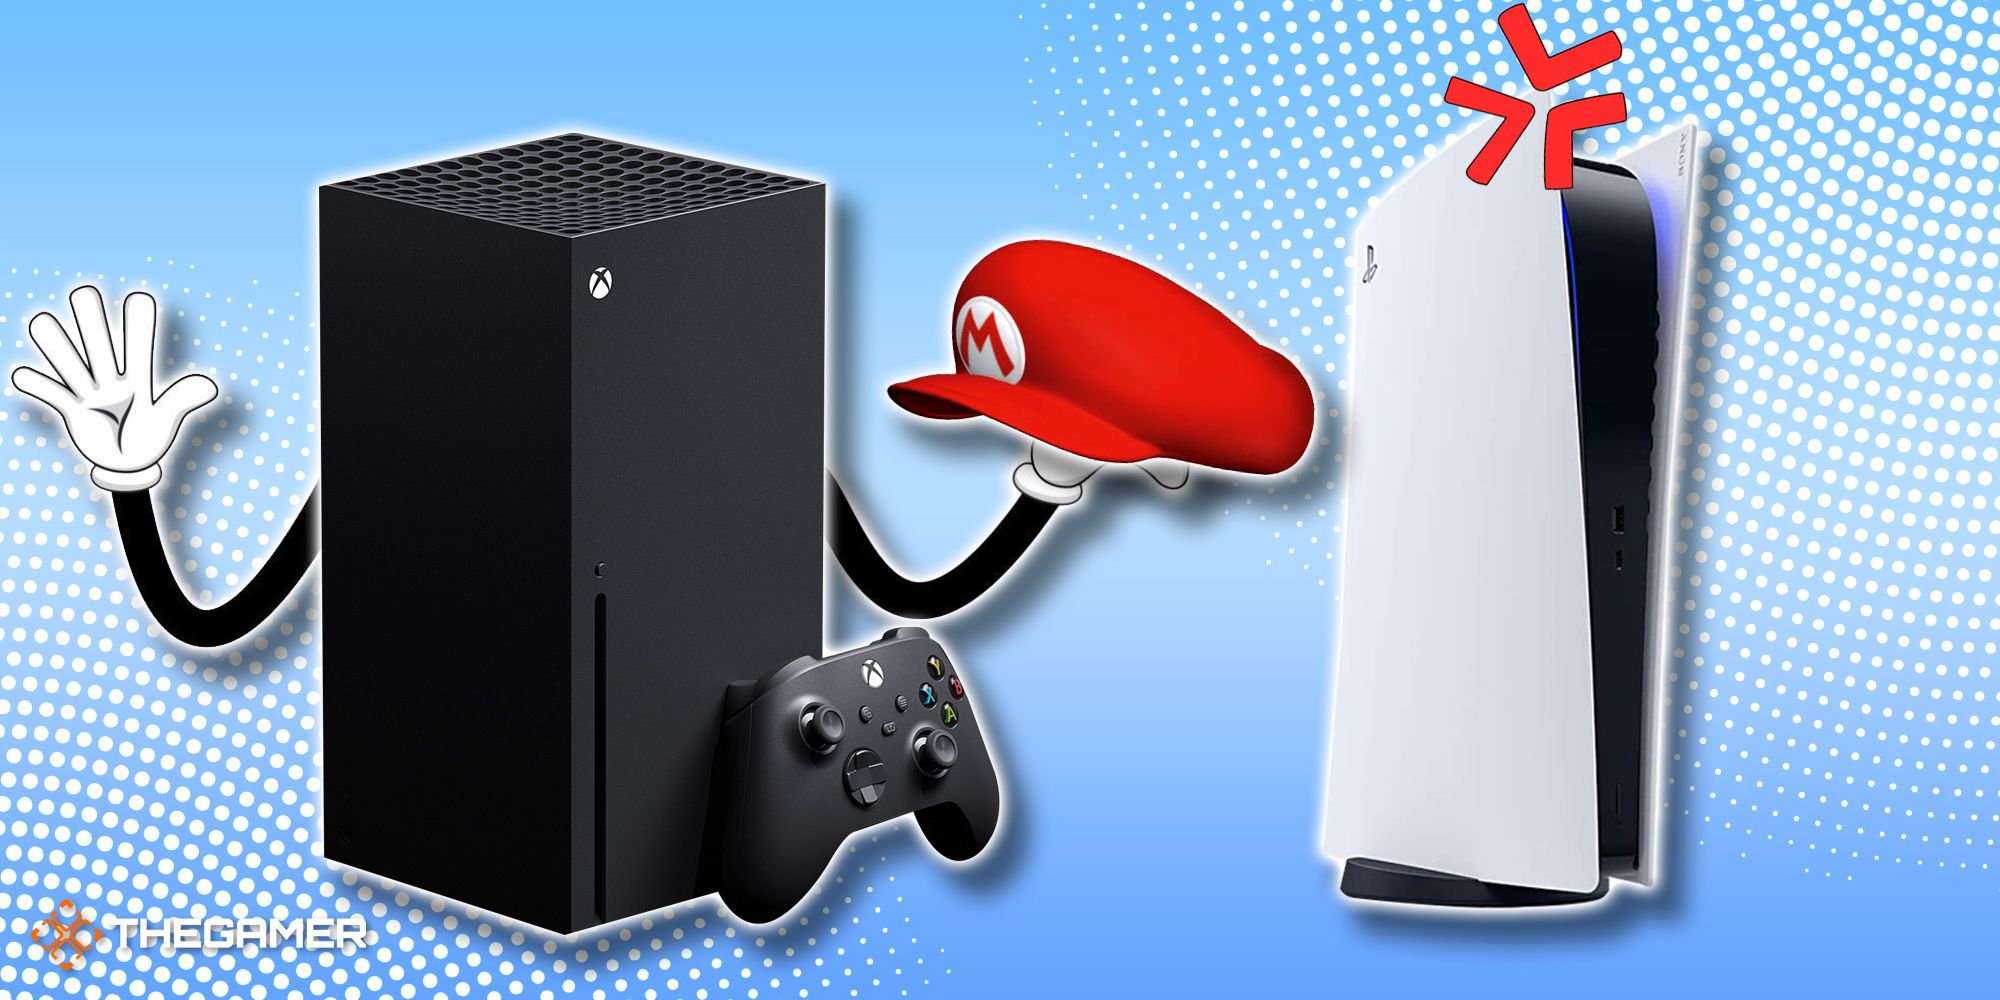 Microsoft putting Mario hat on a PlayStation 5